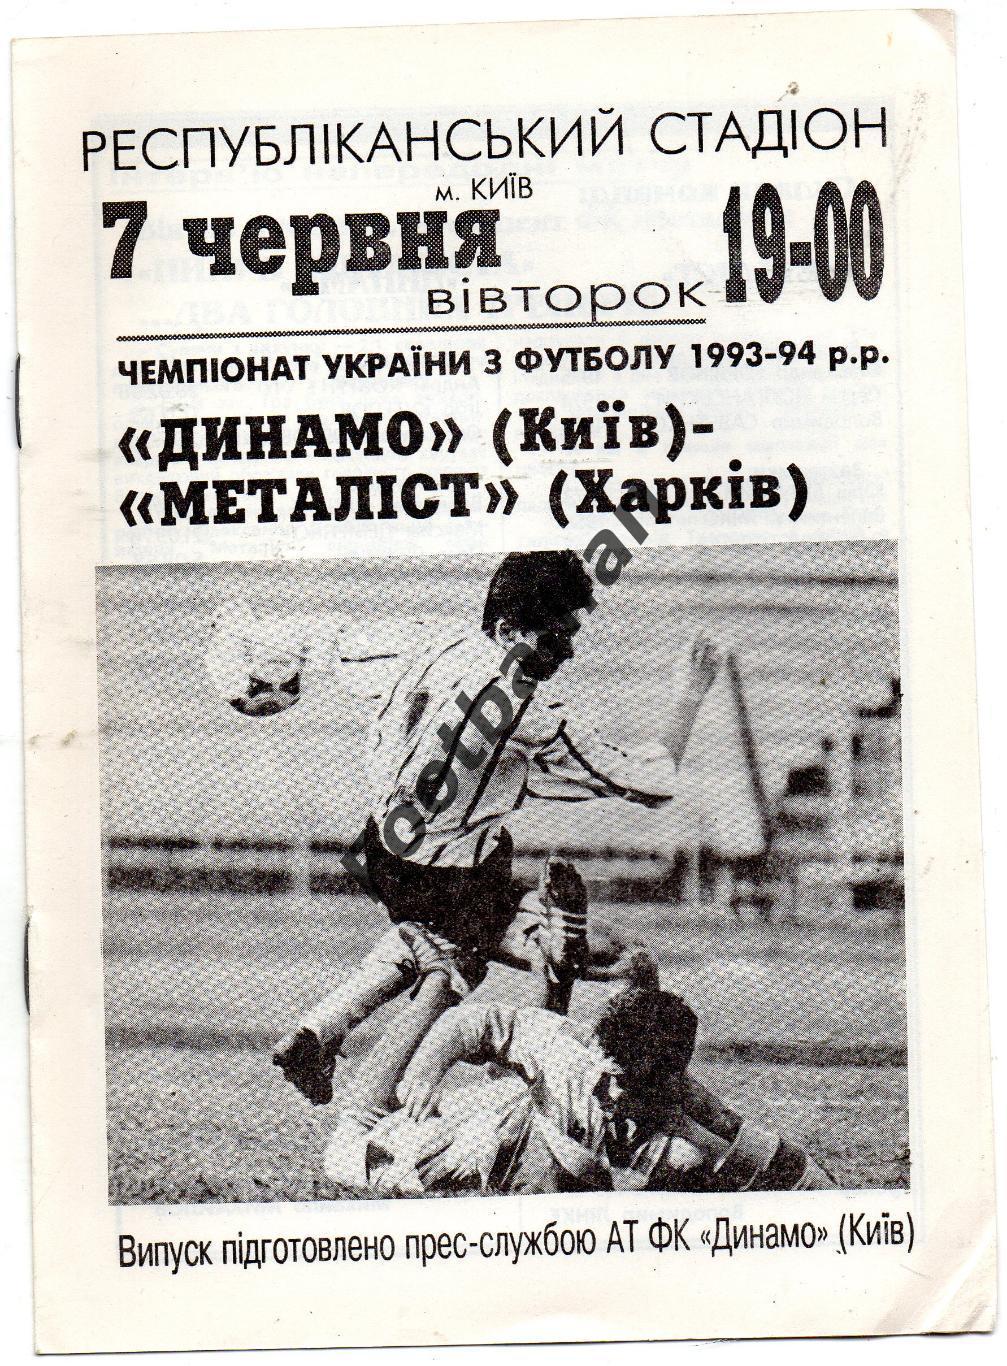 Динамо Киев - Металлист Харьков 07.06.1994